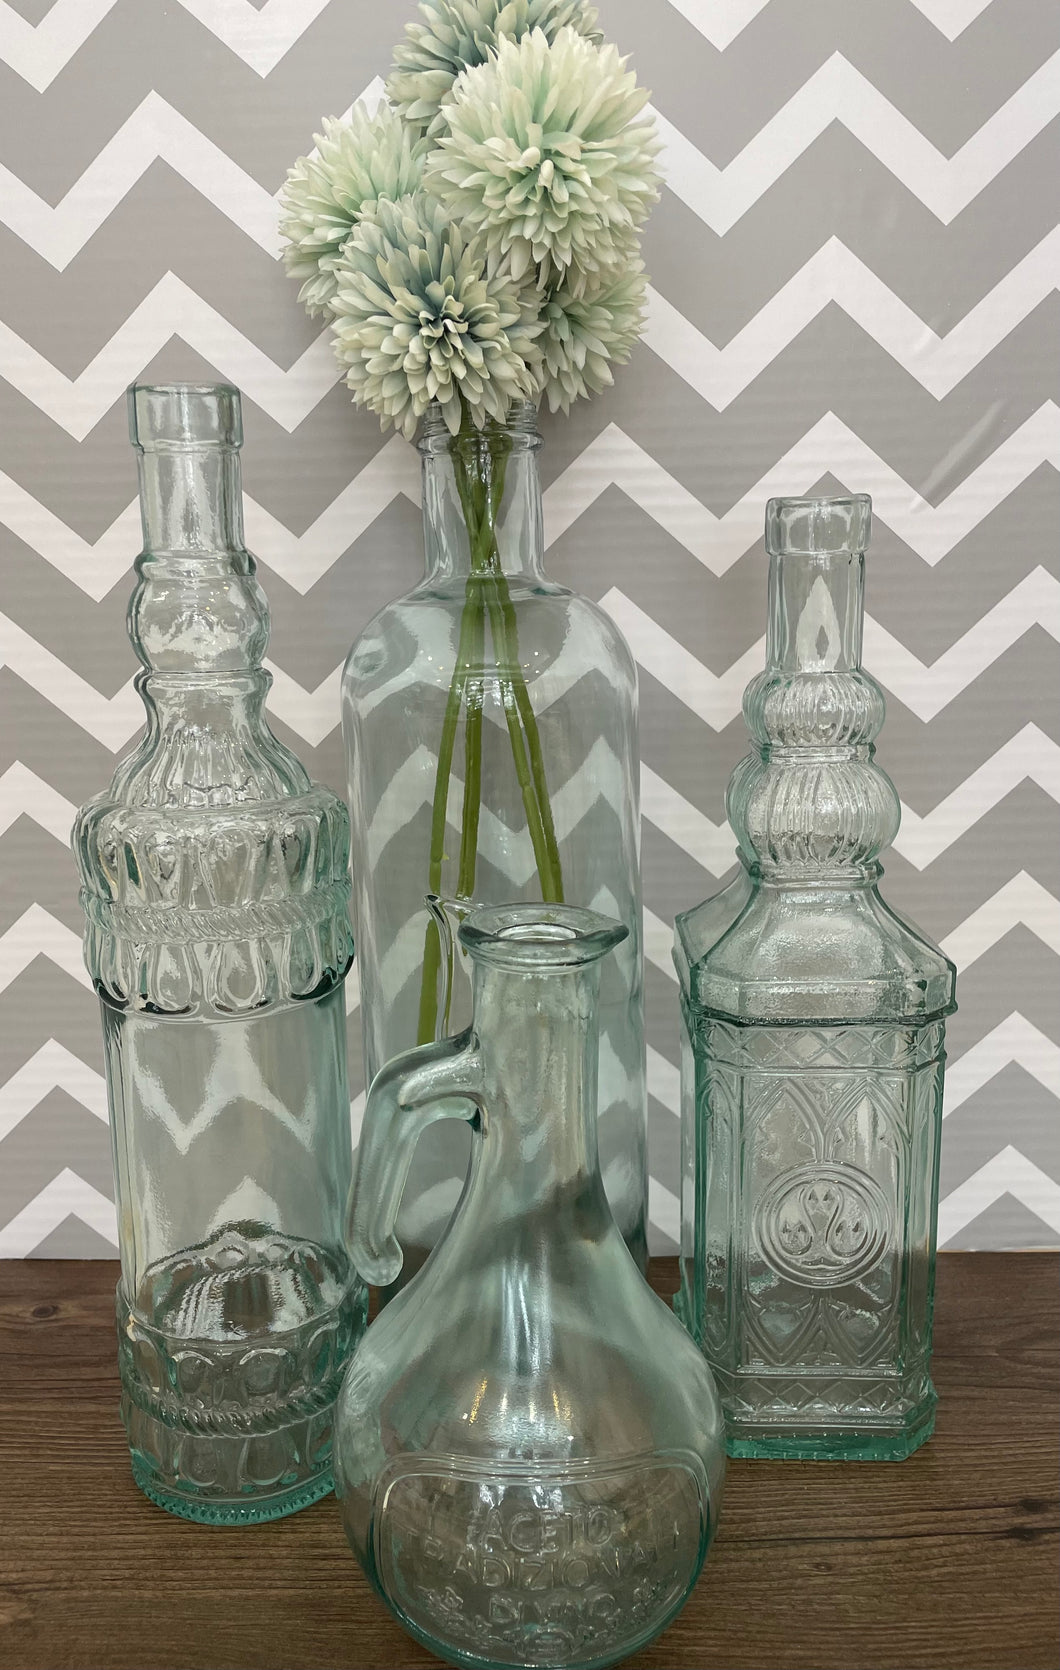 Event Decor Rentals-Sea glass bottles/vases (vintage look)